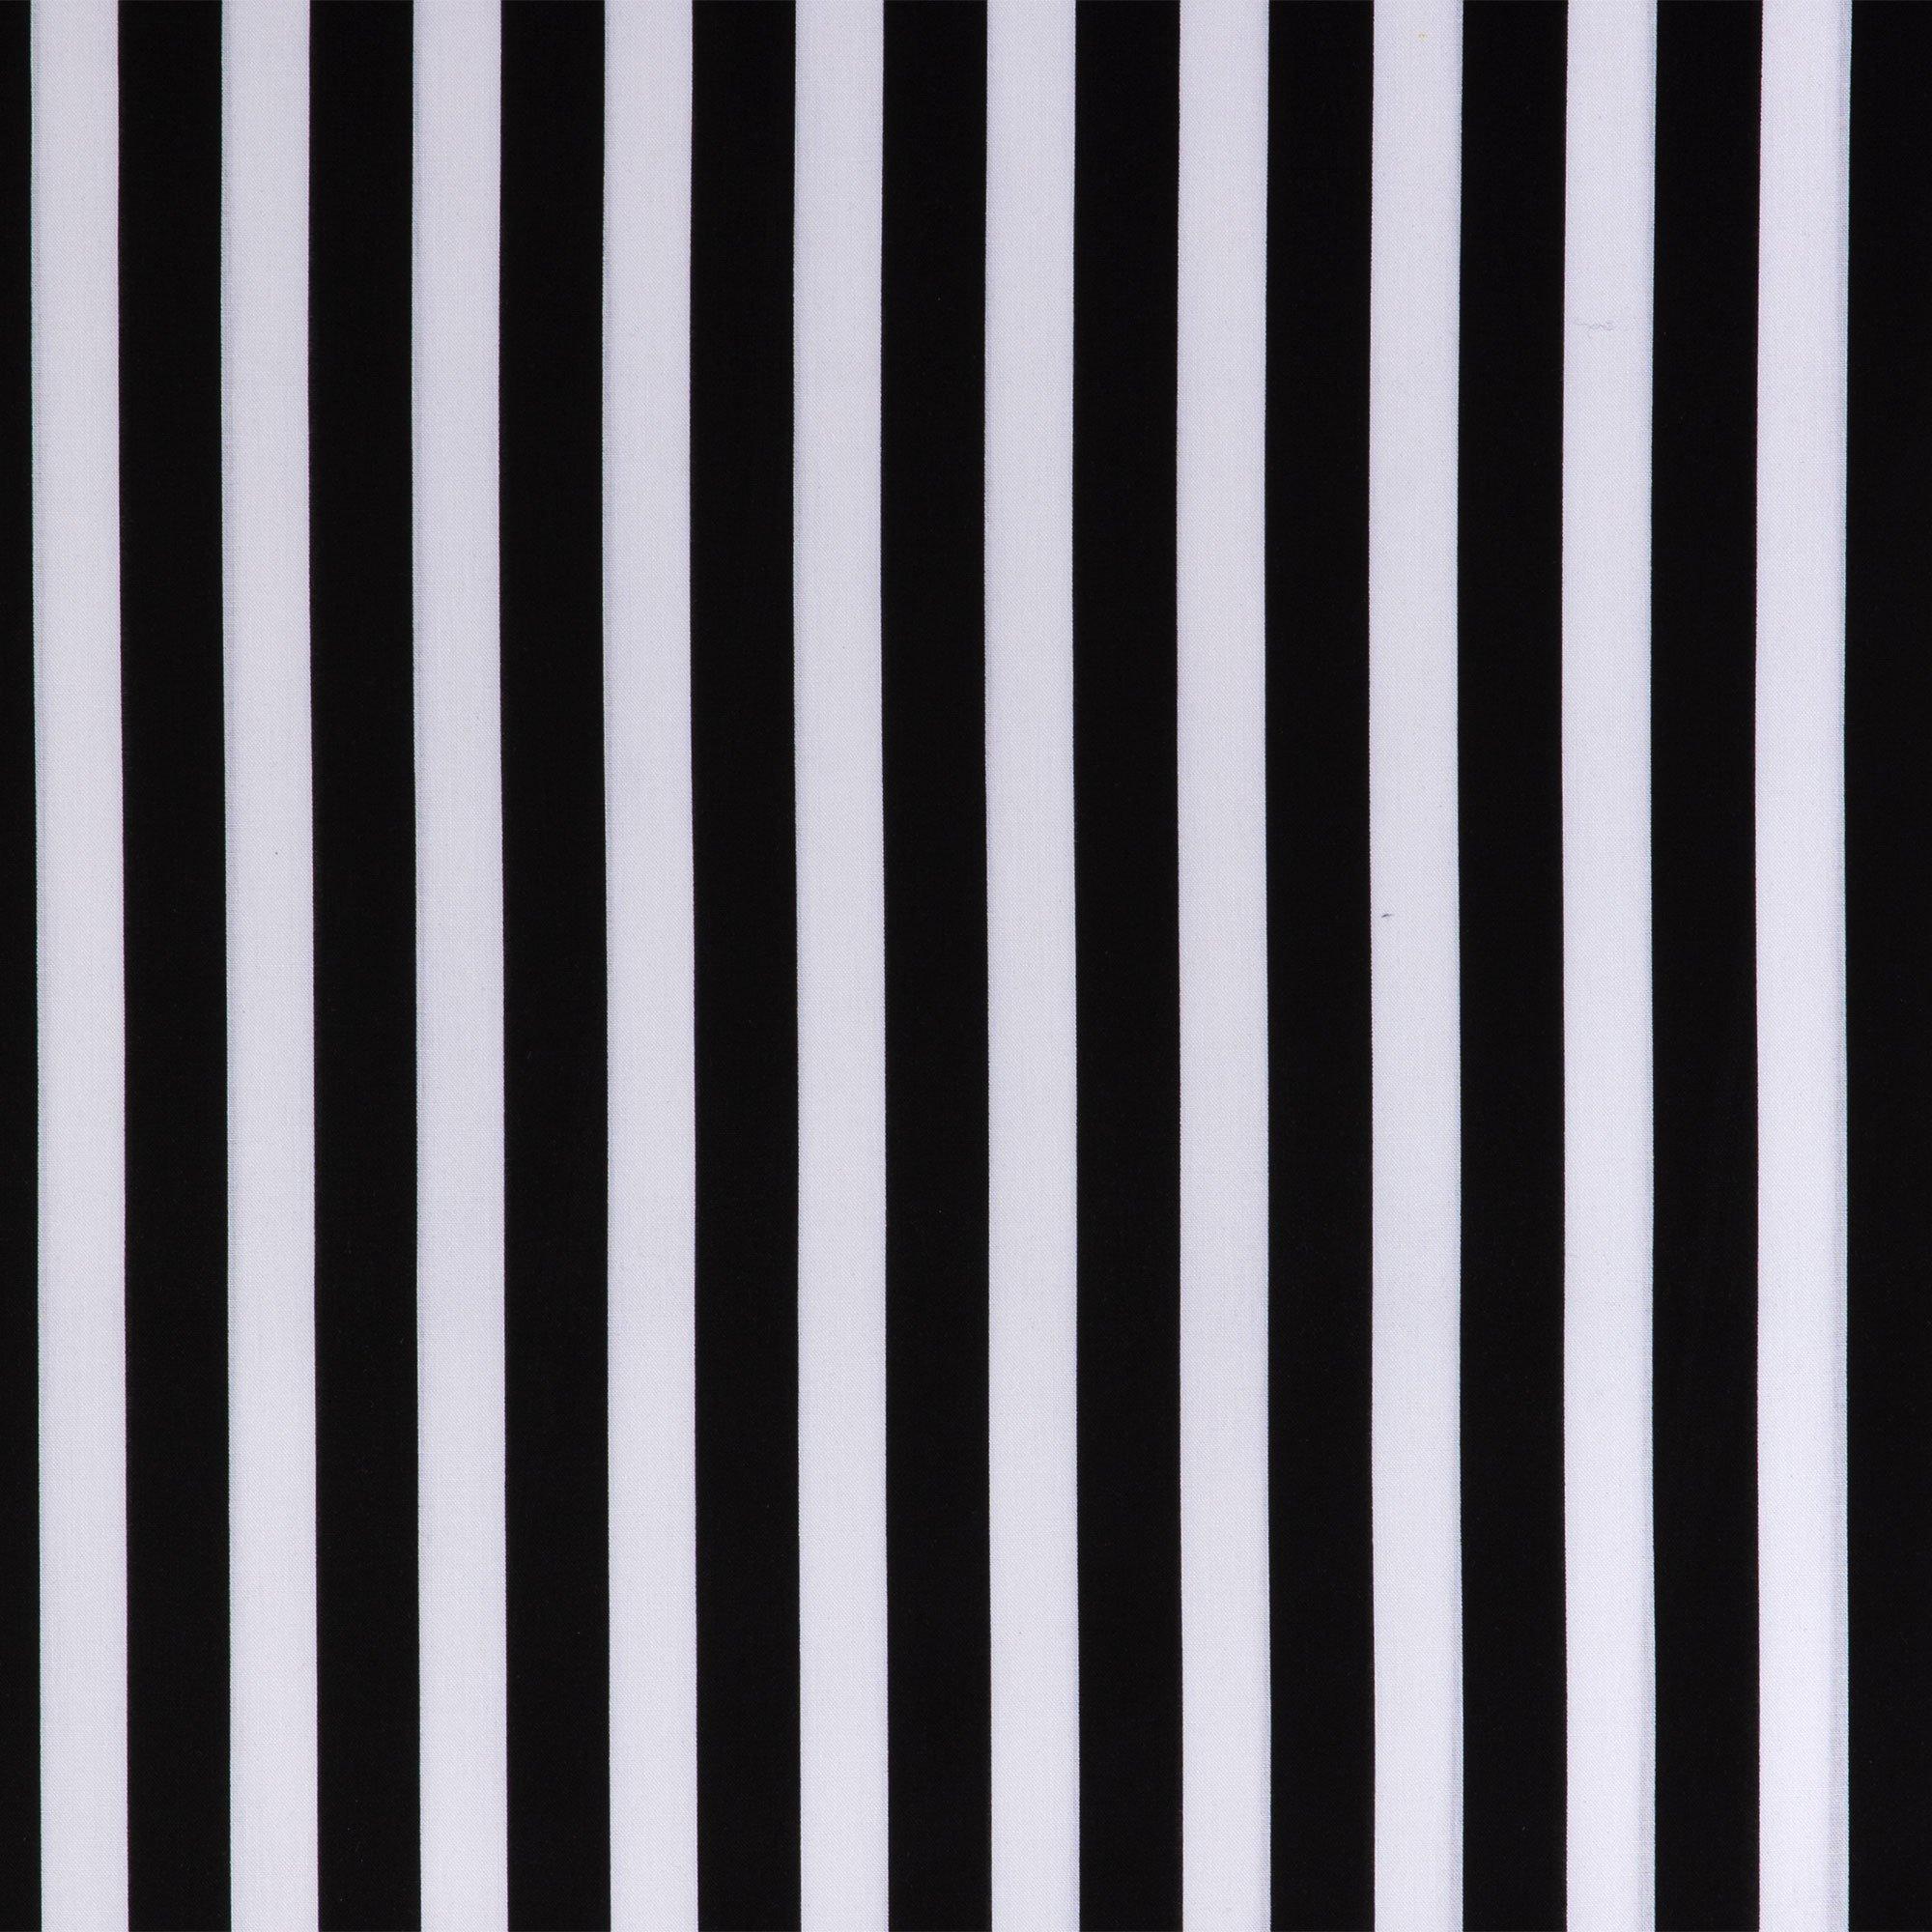 Striped Cotton Apparel Fabric, Hobby Lobby